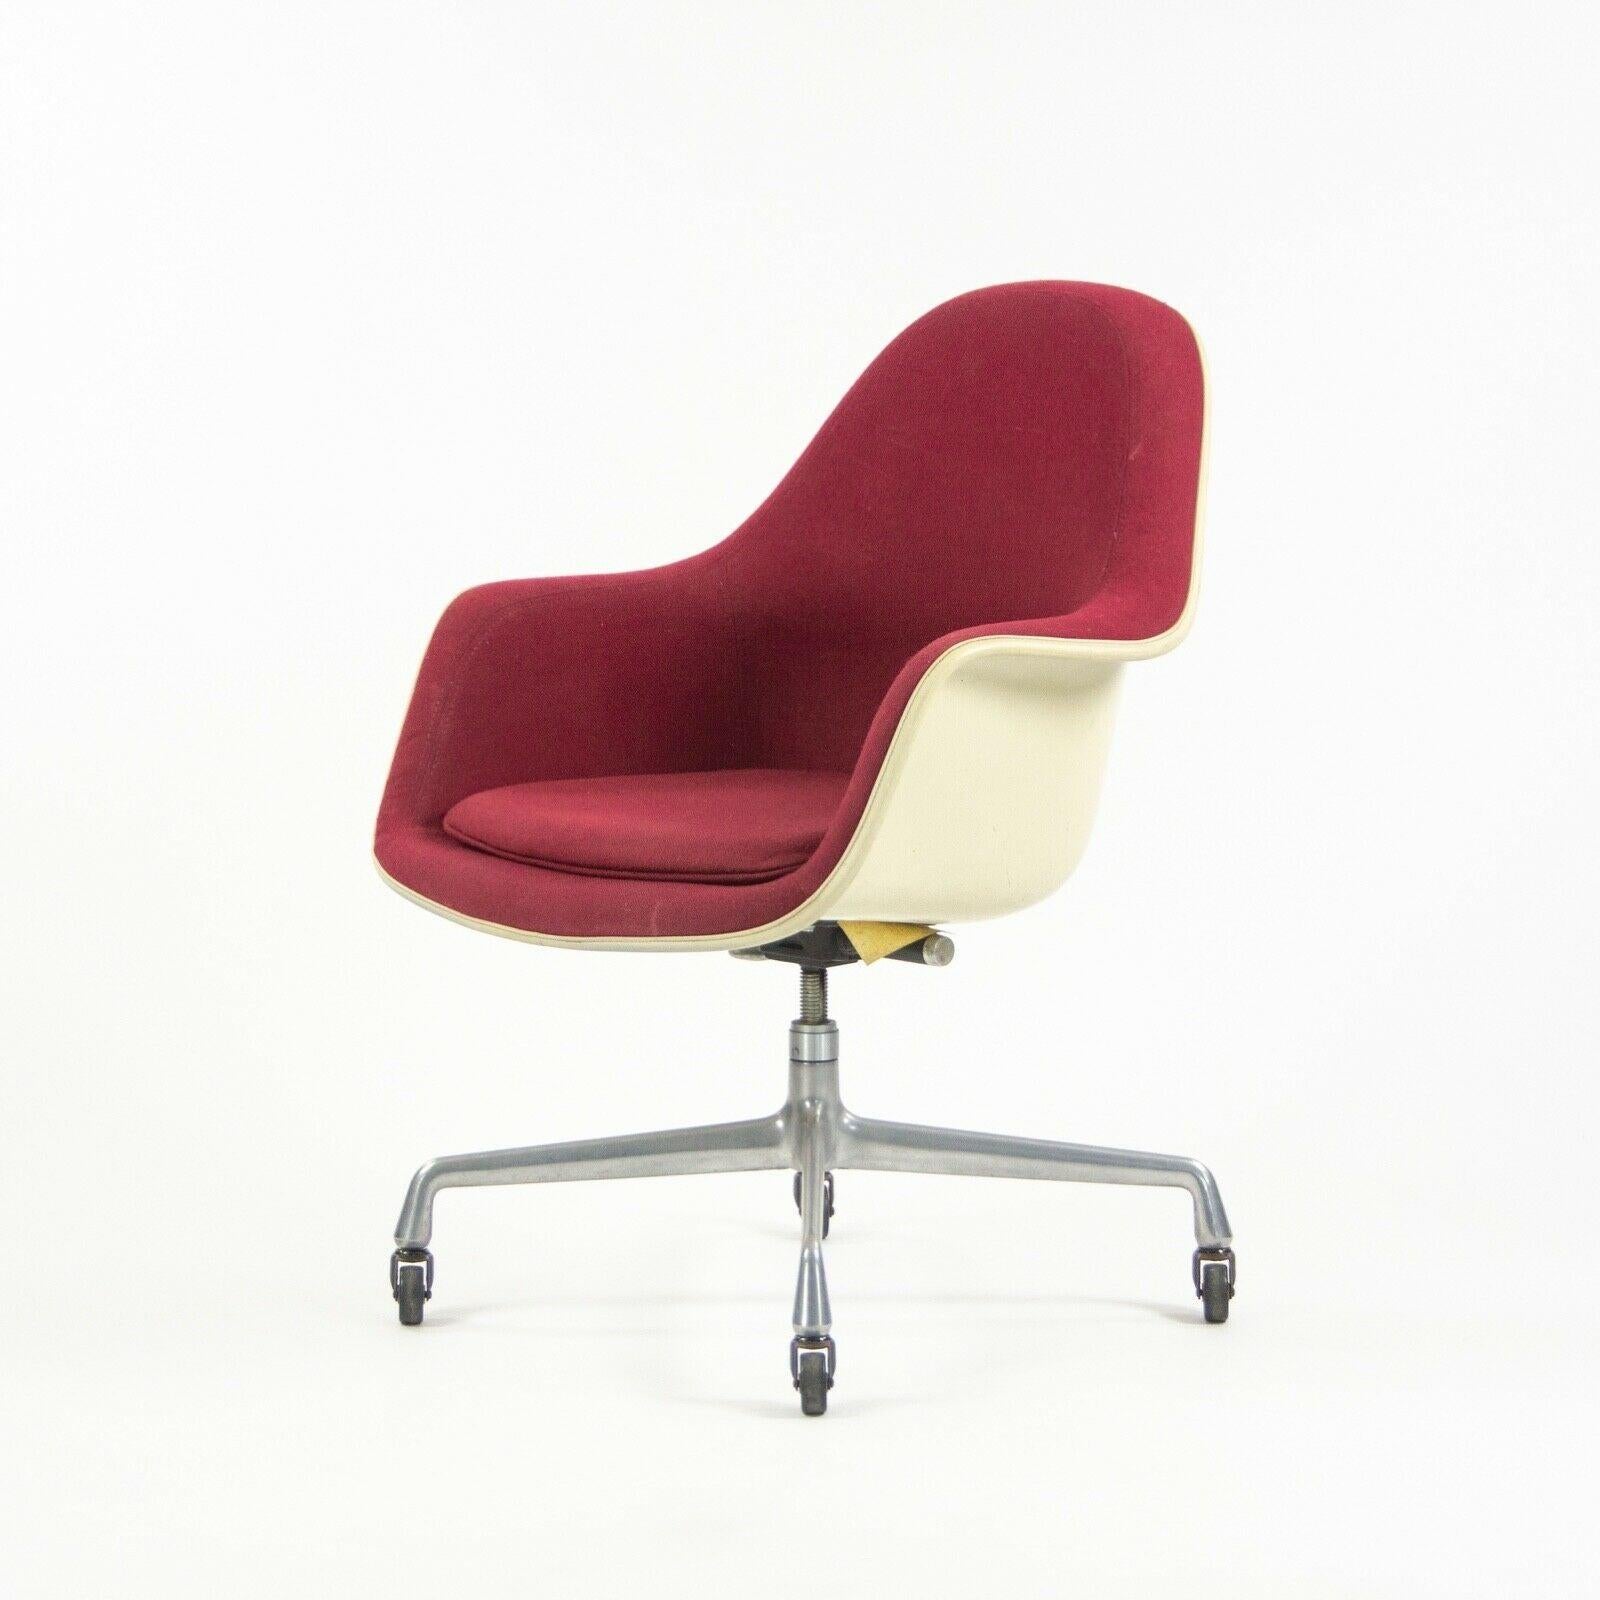 Late 20th Century 1977 Eames Herman Miller EC175 Upholstered Fiberglass Shell Chair For Sale